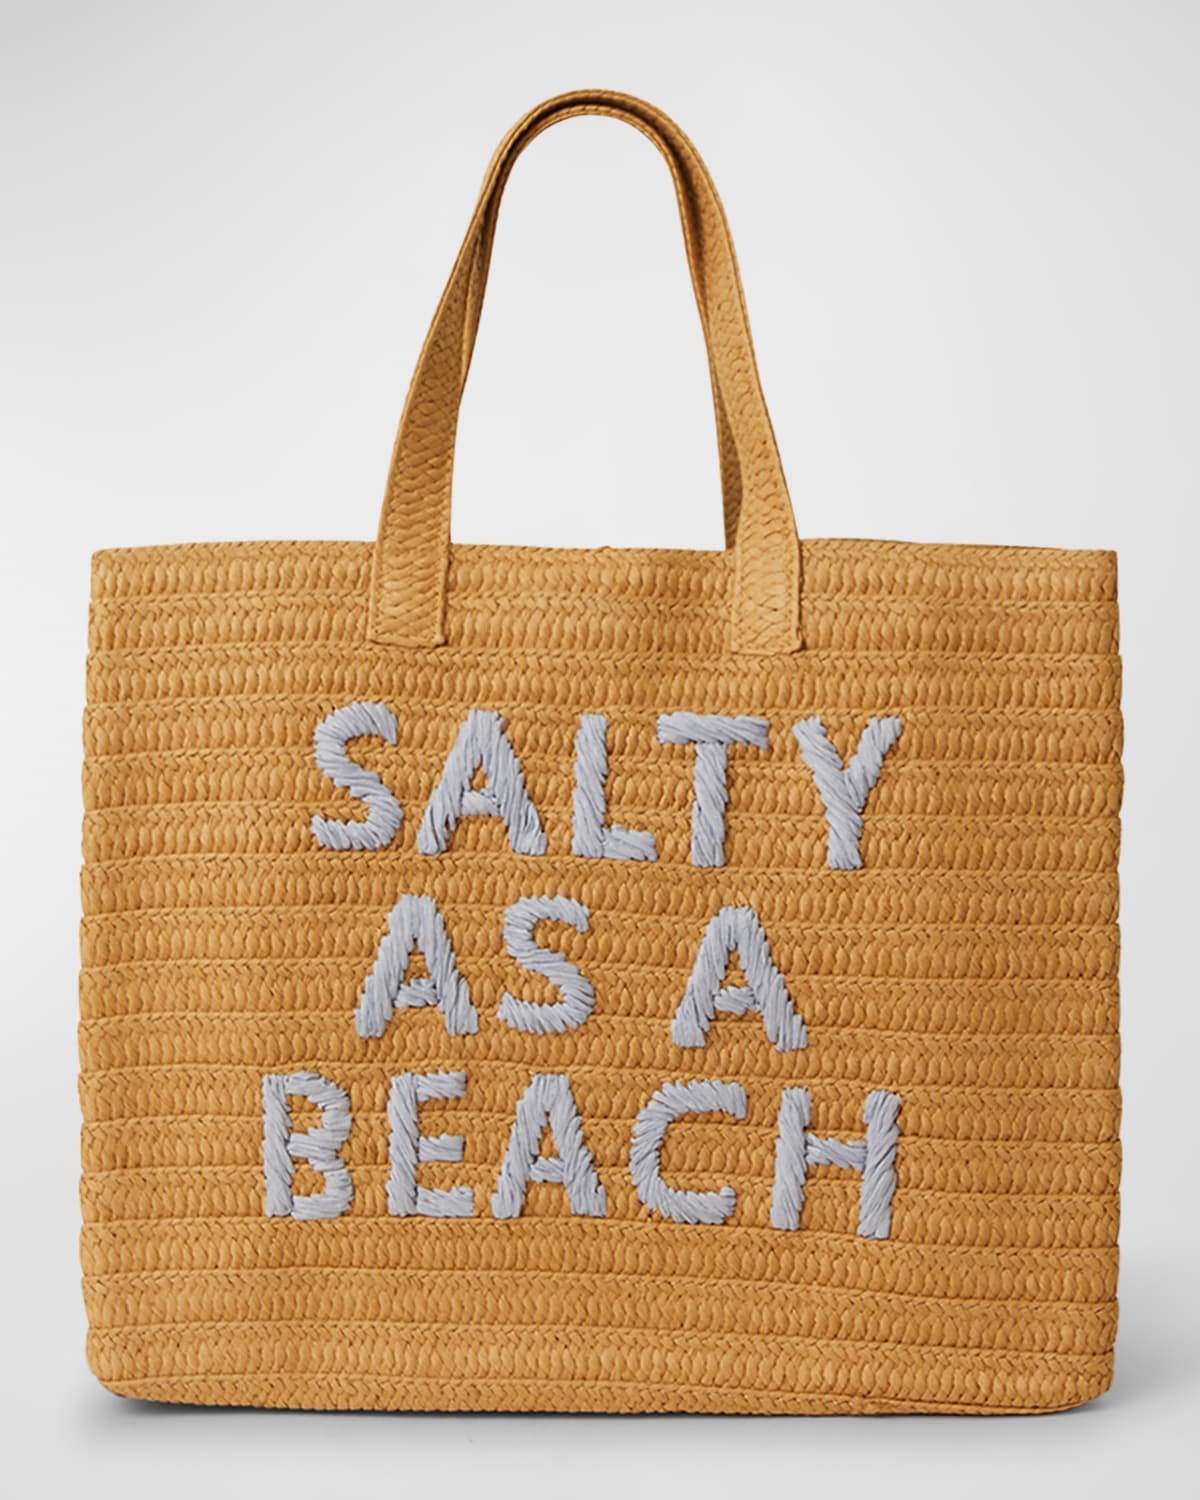 Salty as a Beach Straw Tote Bag